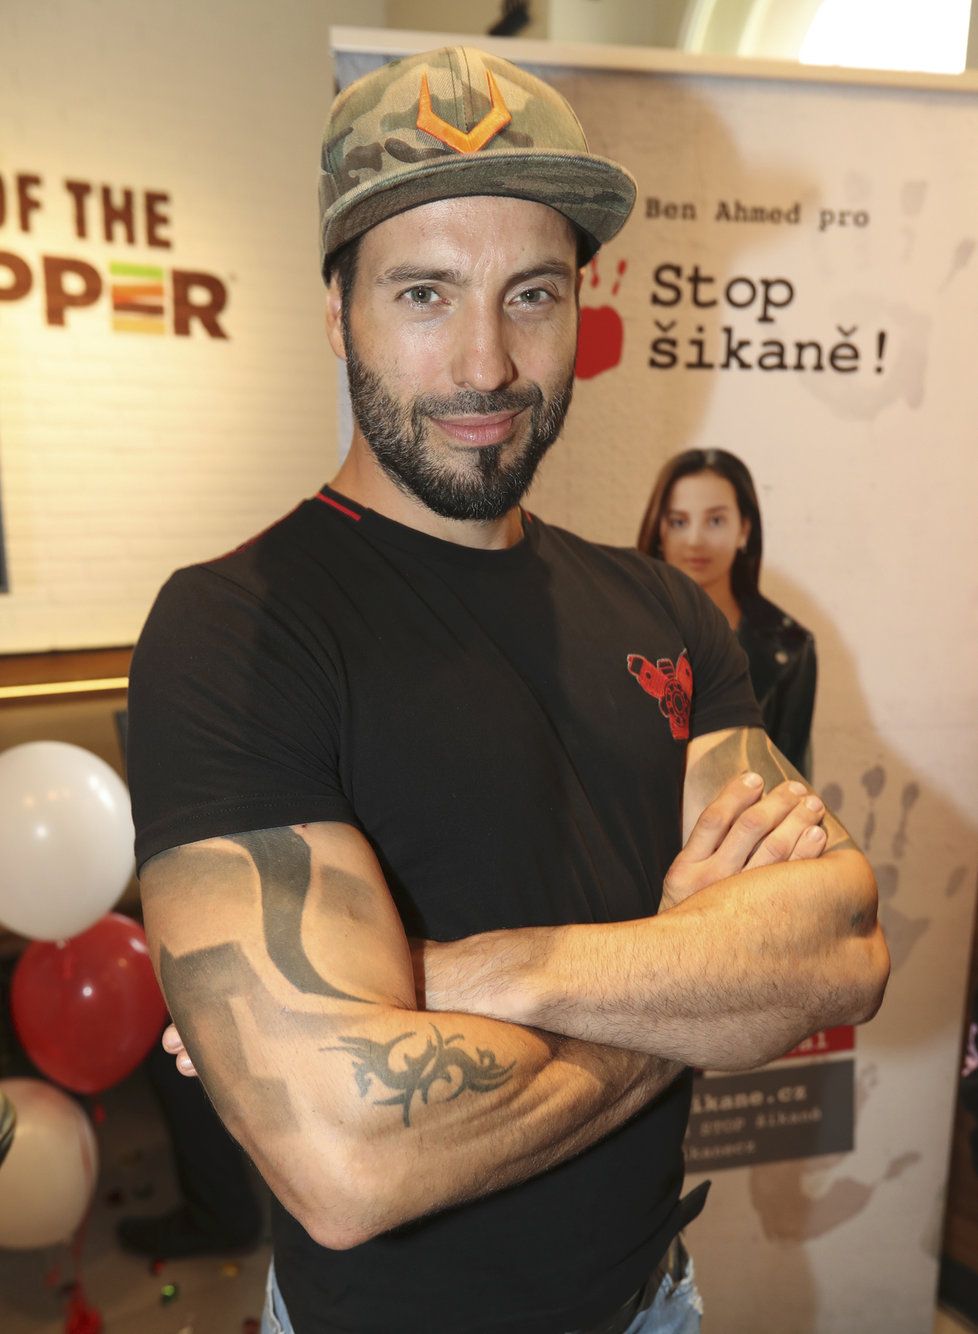 Václav Noid Bárta pokřtil videoklip Síť na podporu boje proti šikaně.